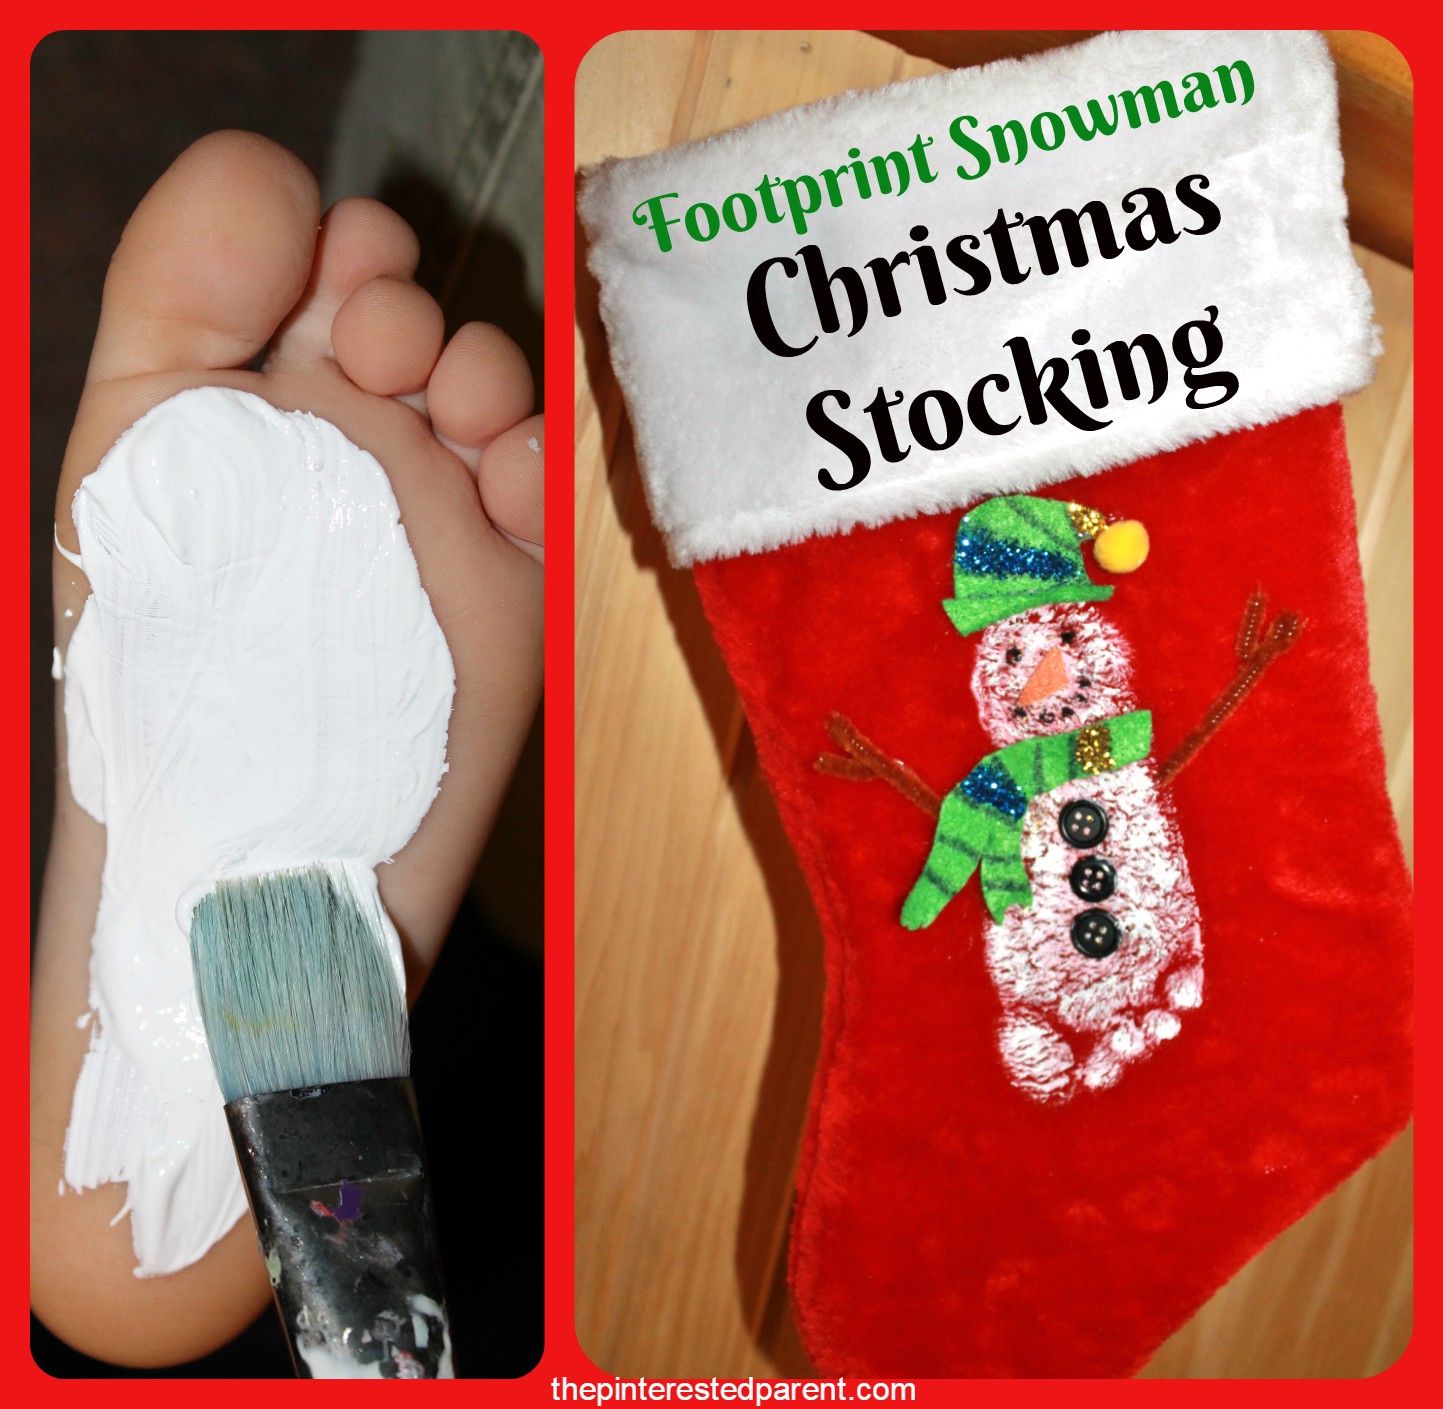 Footprint Snowman Christmas Stocking - An easy keepsake stocking for the holidays